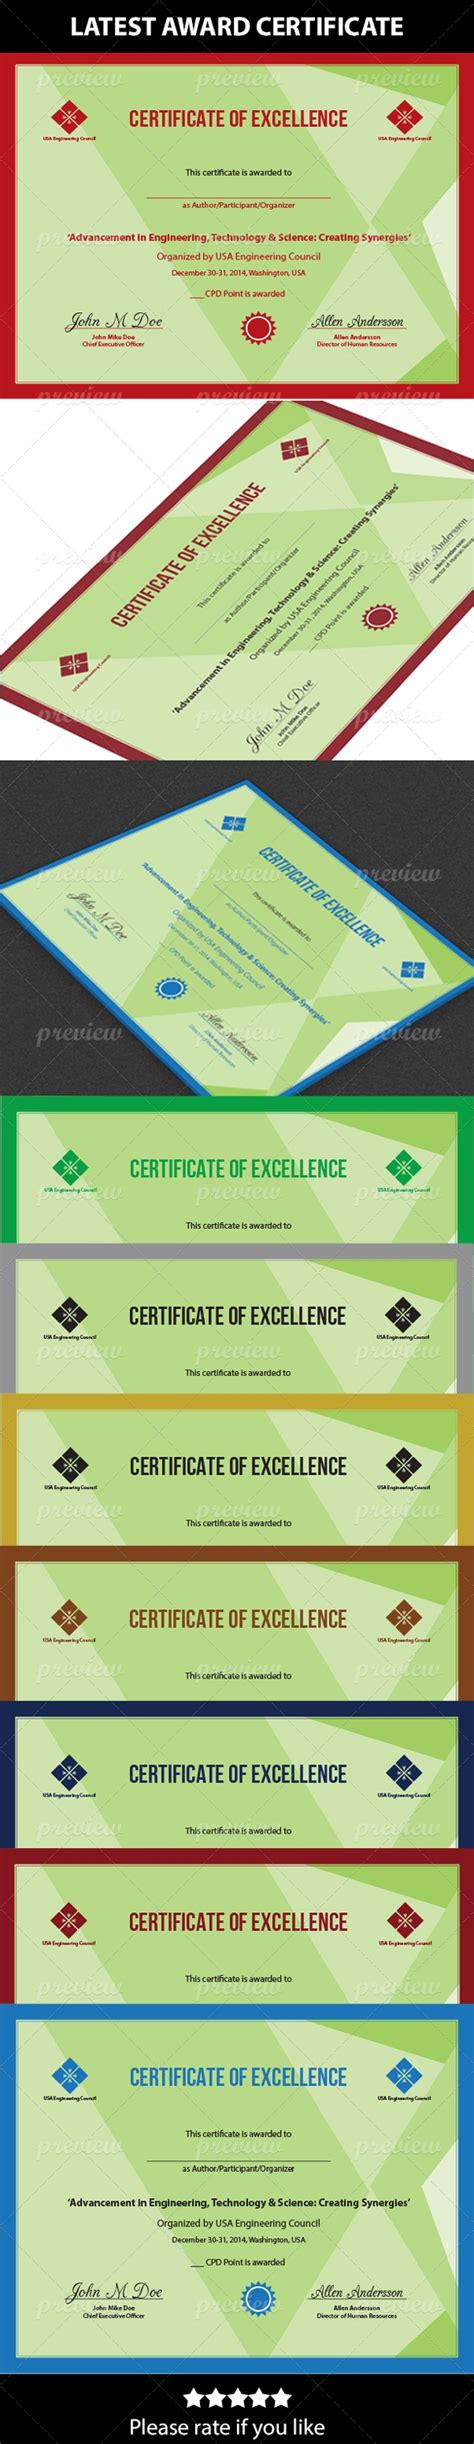 latest award certificate prints codegrape